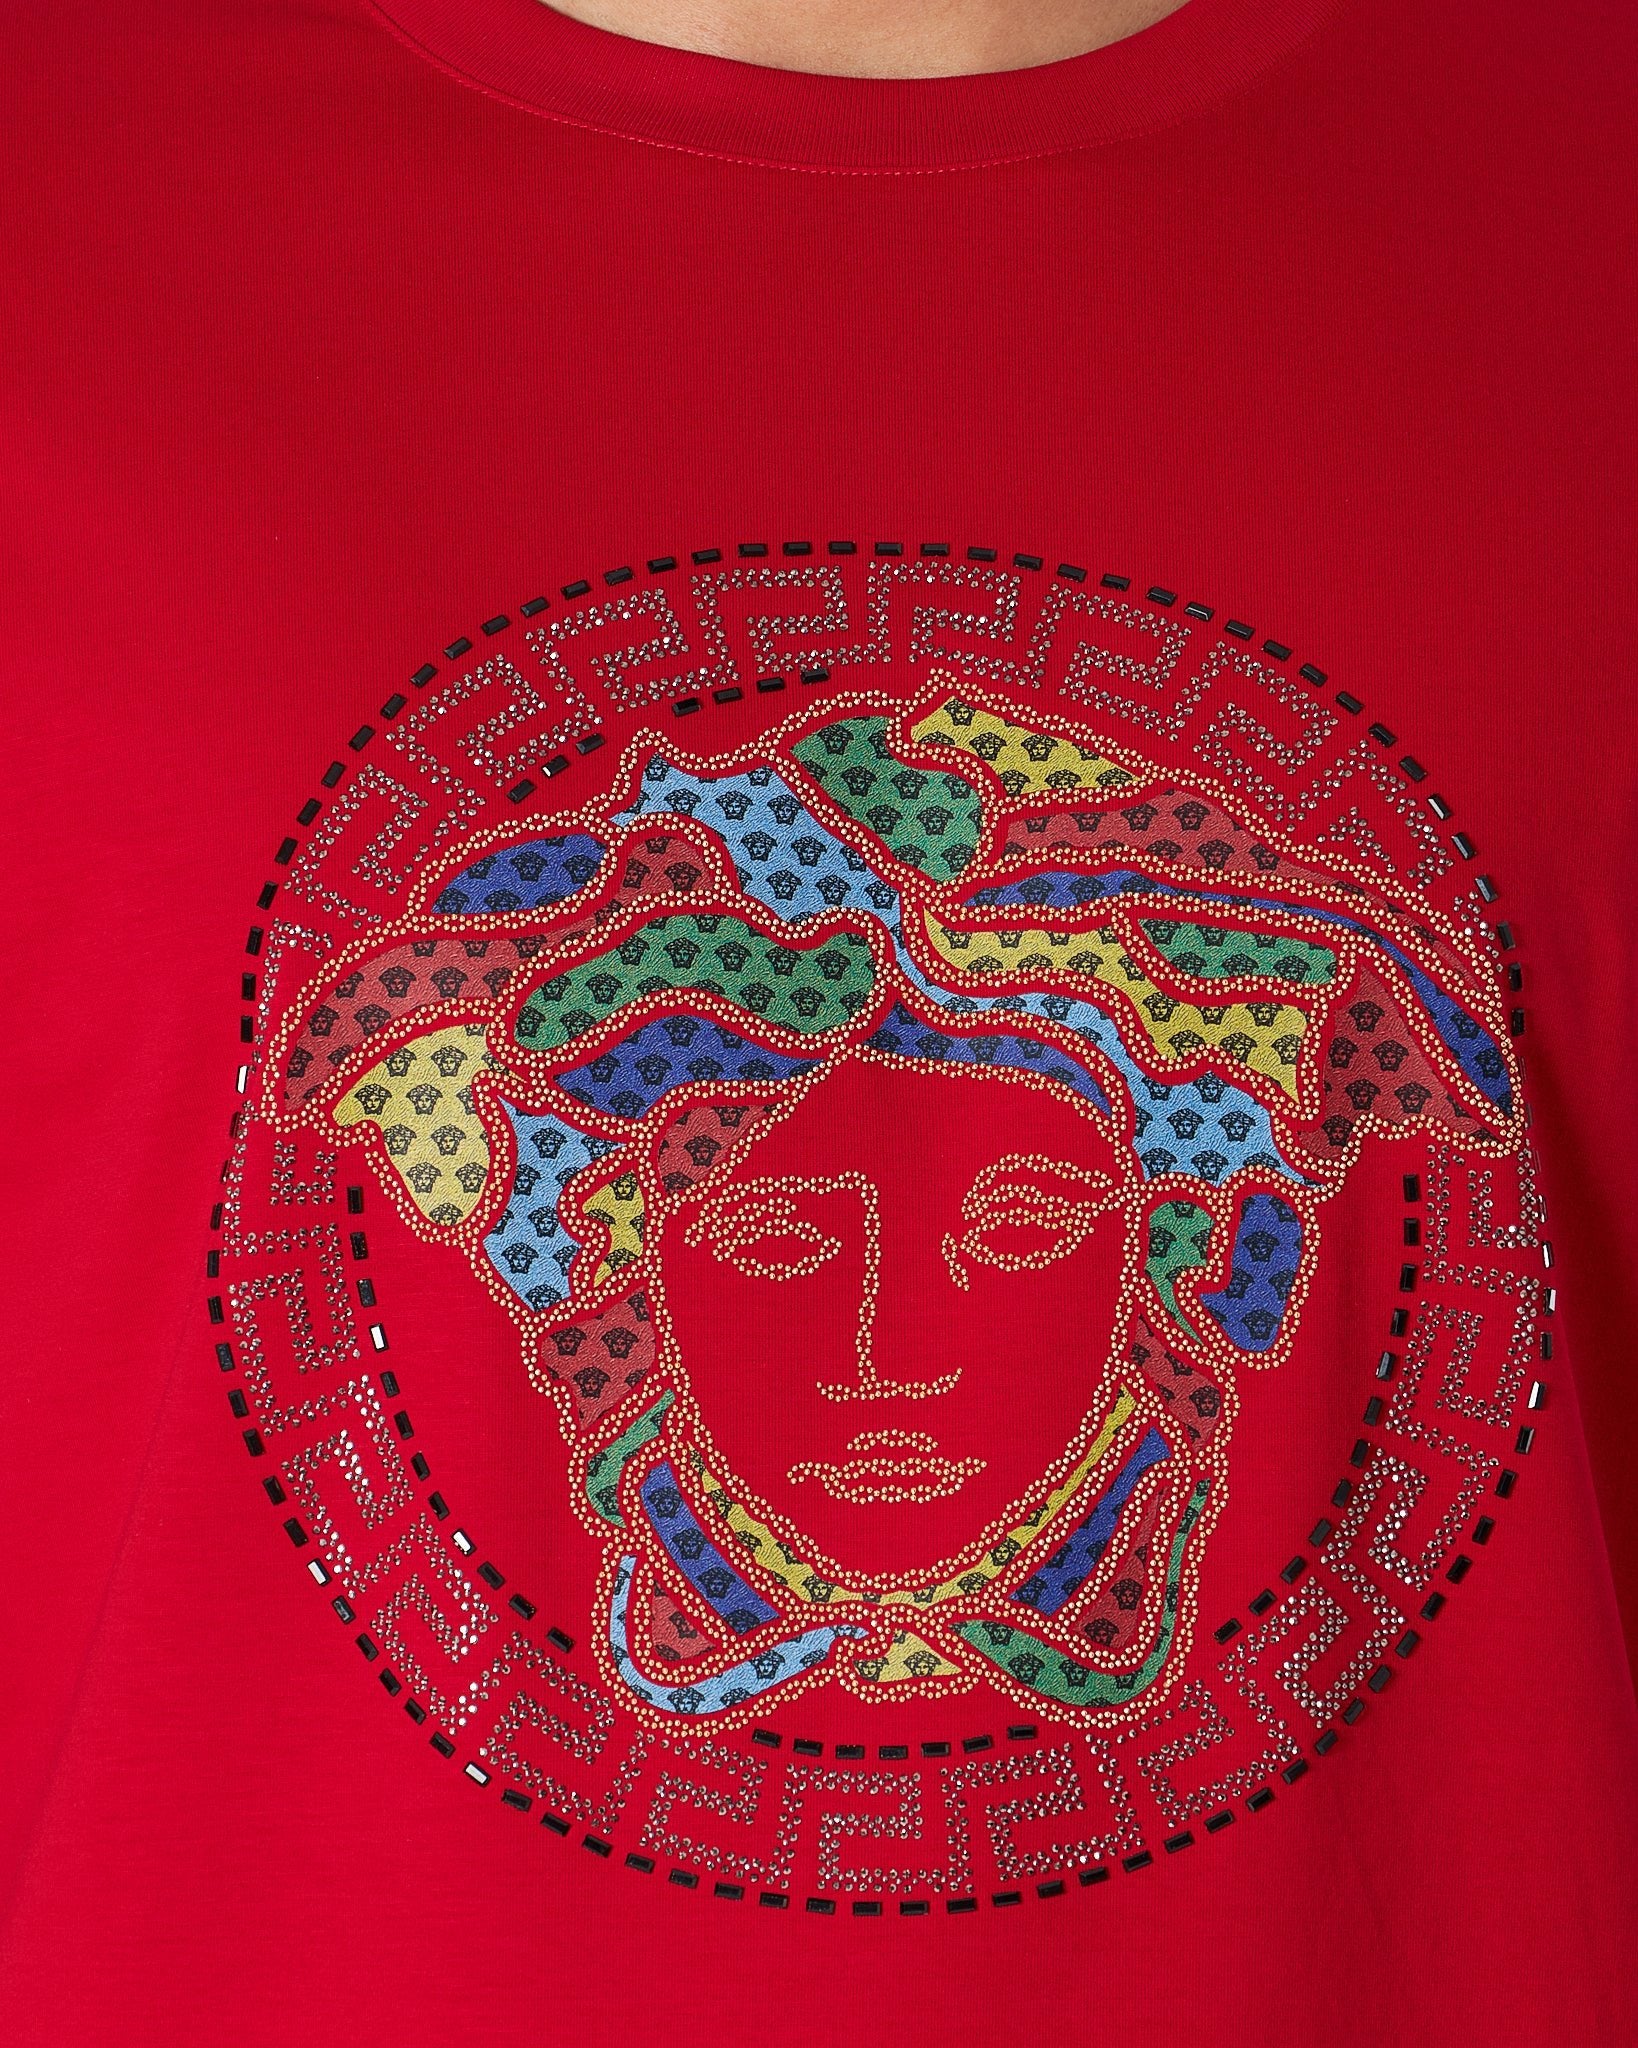 MOI OUTFIT-Rhinestone Medusa Printed Men T-Shirt 59.90